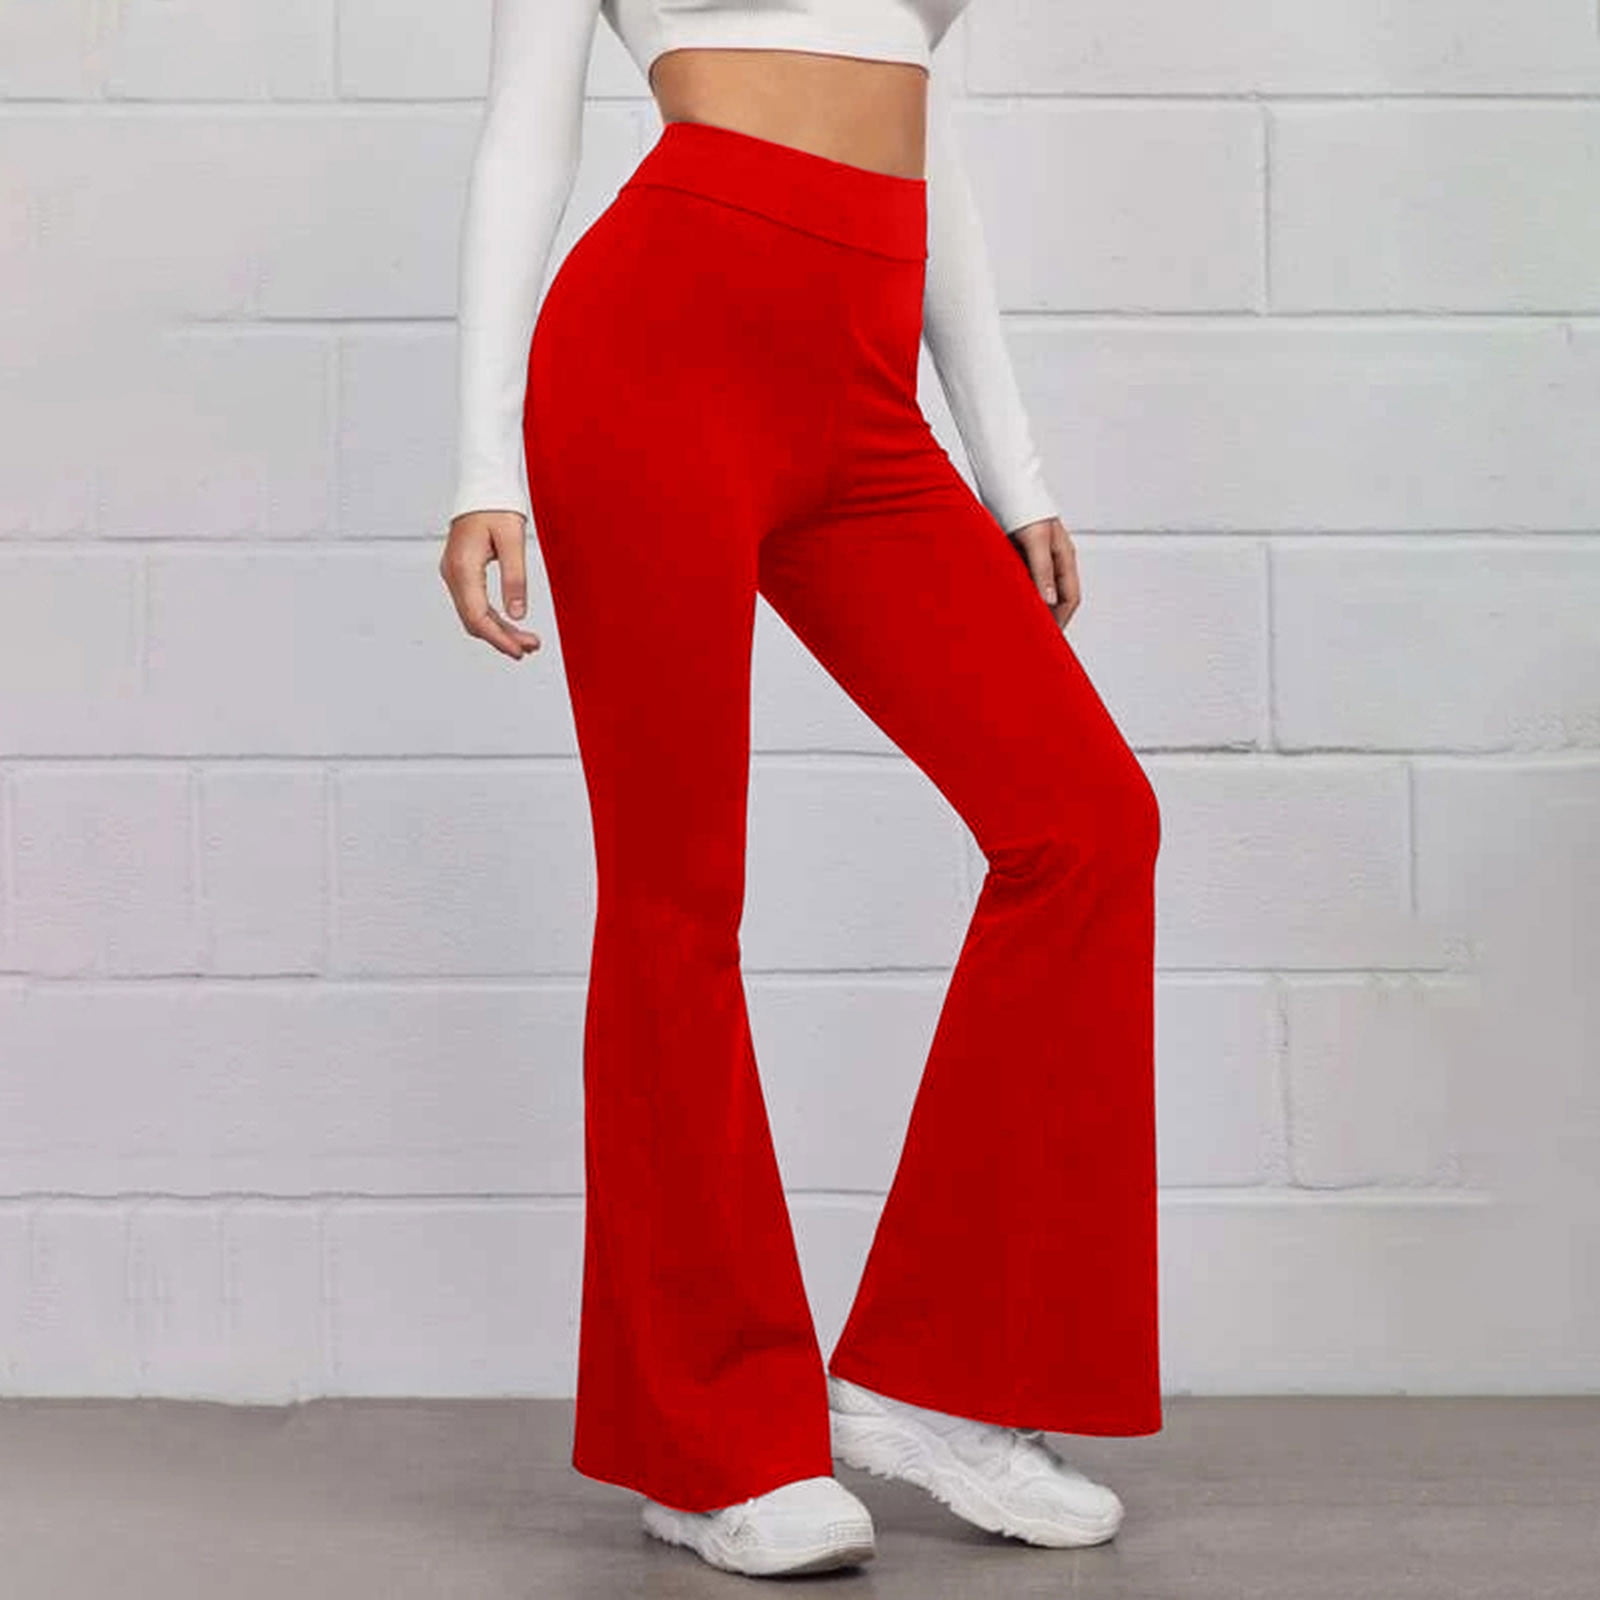 Red SUPER Soft Yoga Pants Flare Bottom Size Medium